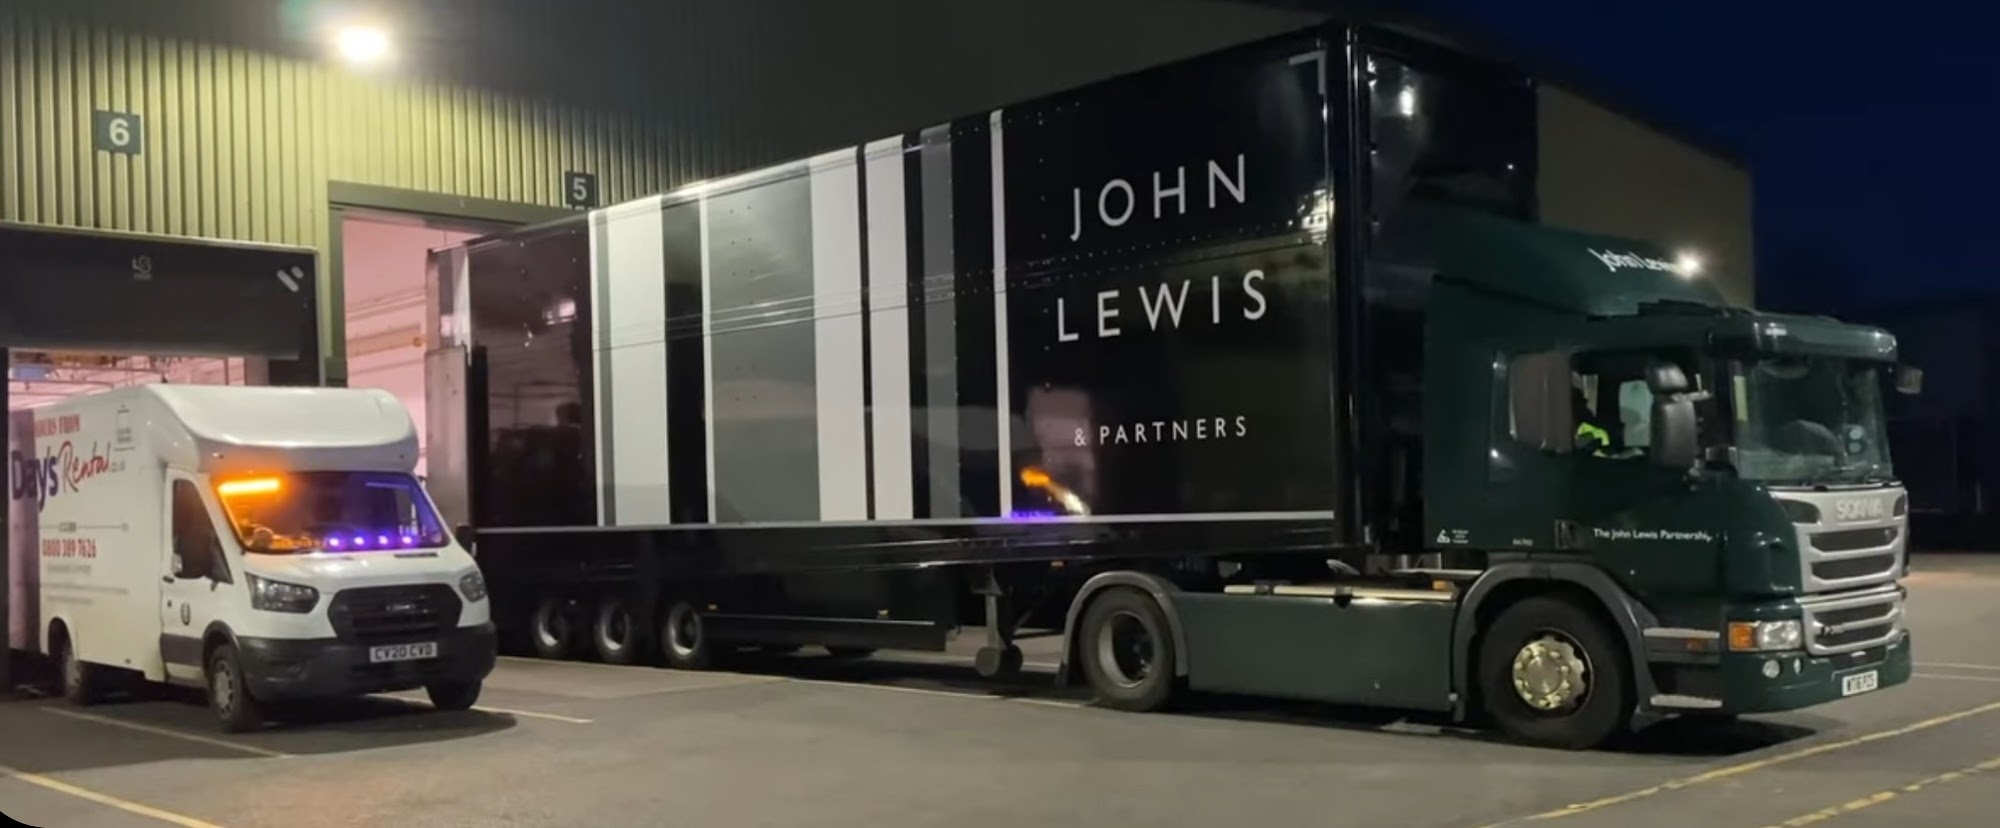 John Lewis Warehouse Only